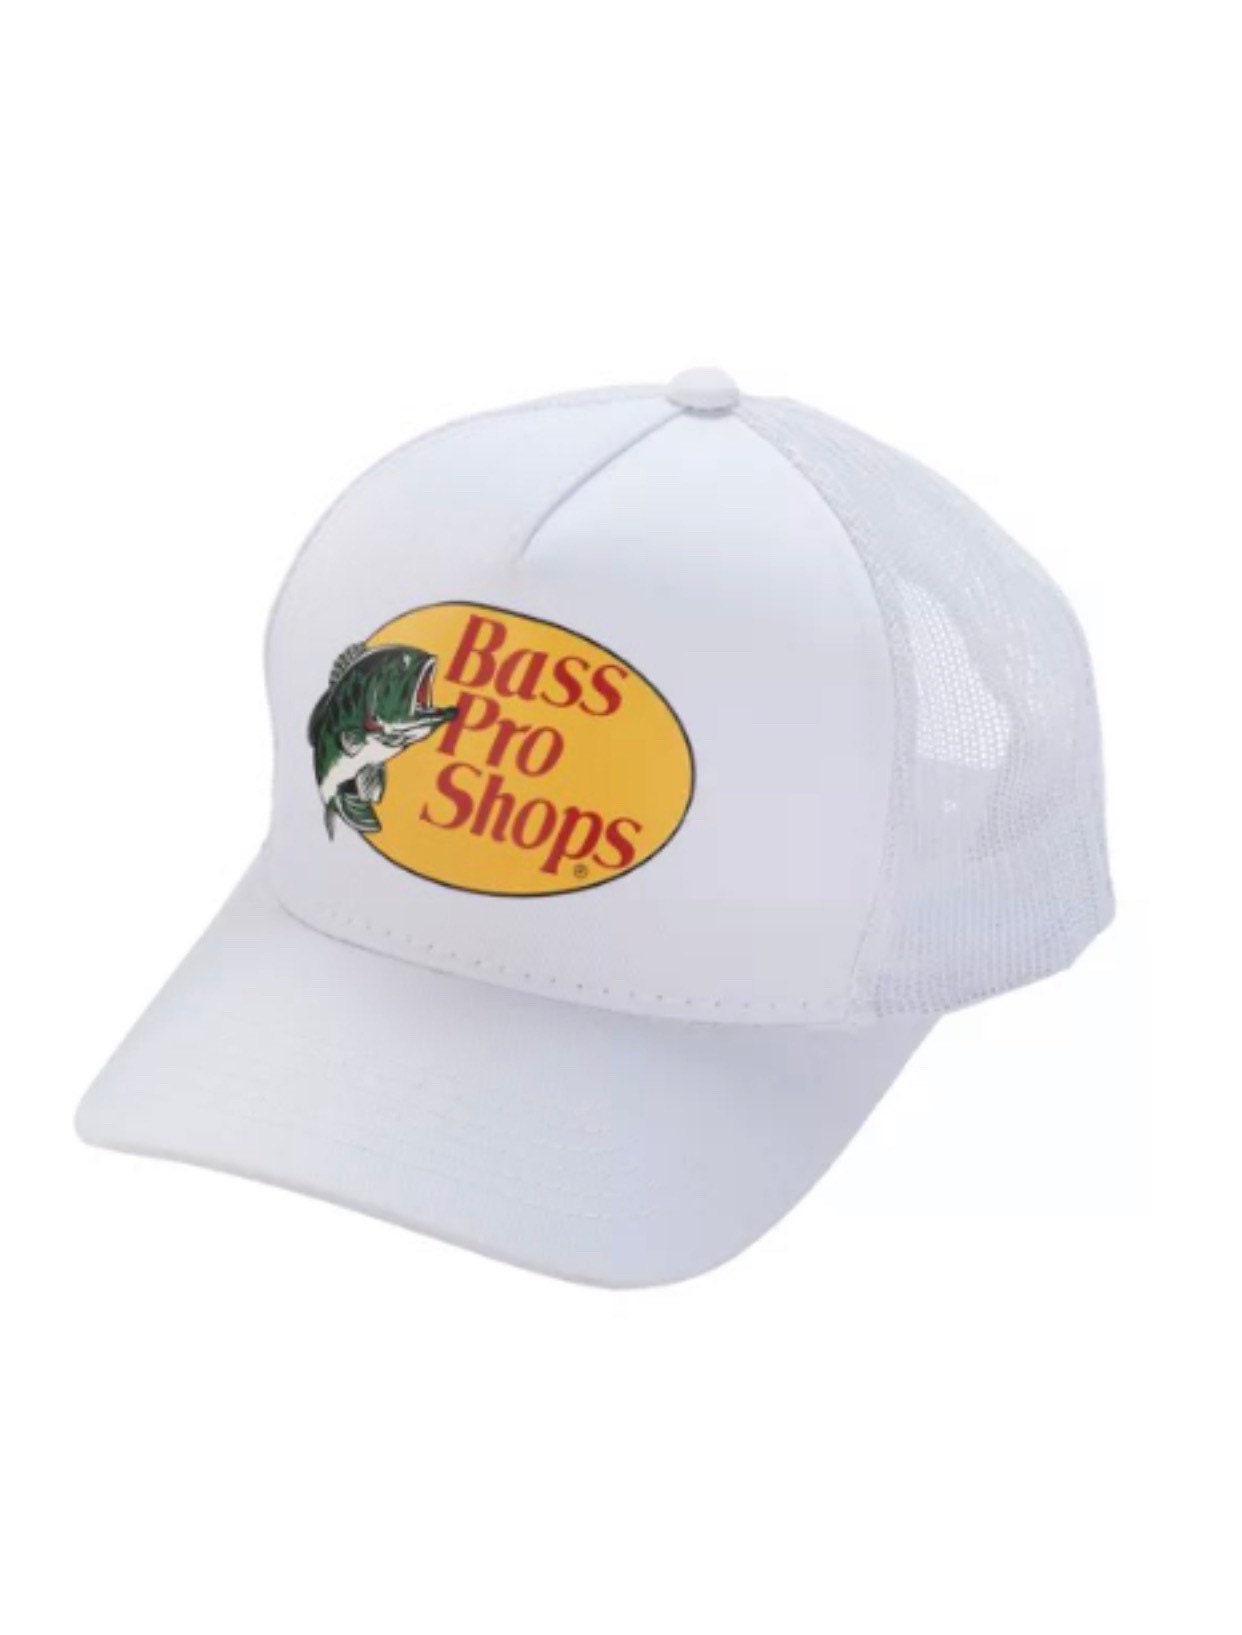 Brand New Bass Pro Shops Mesh Trucker Hat WHITE Ships Within 24 Hours 